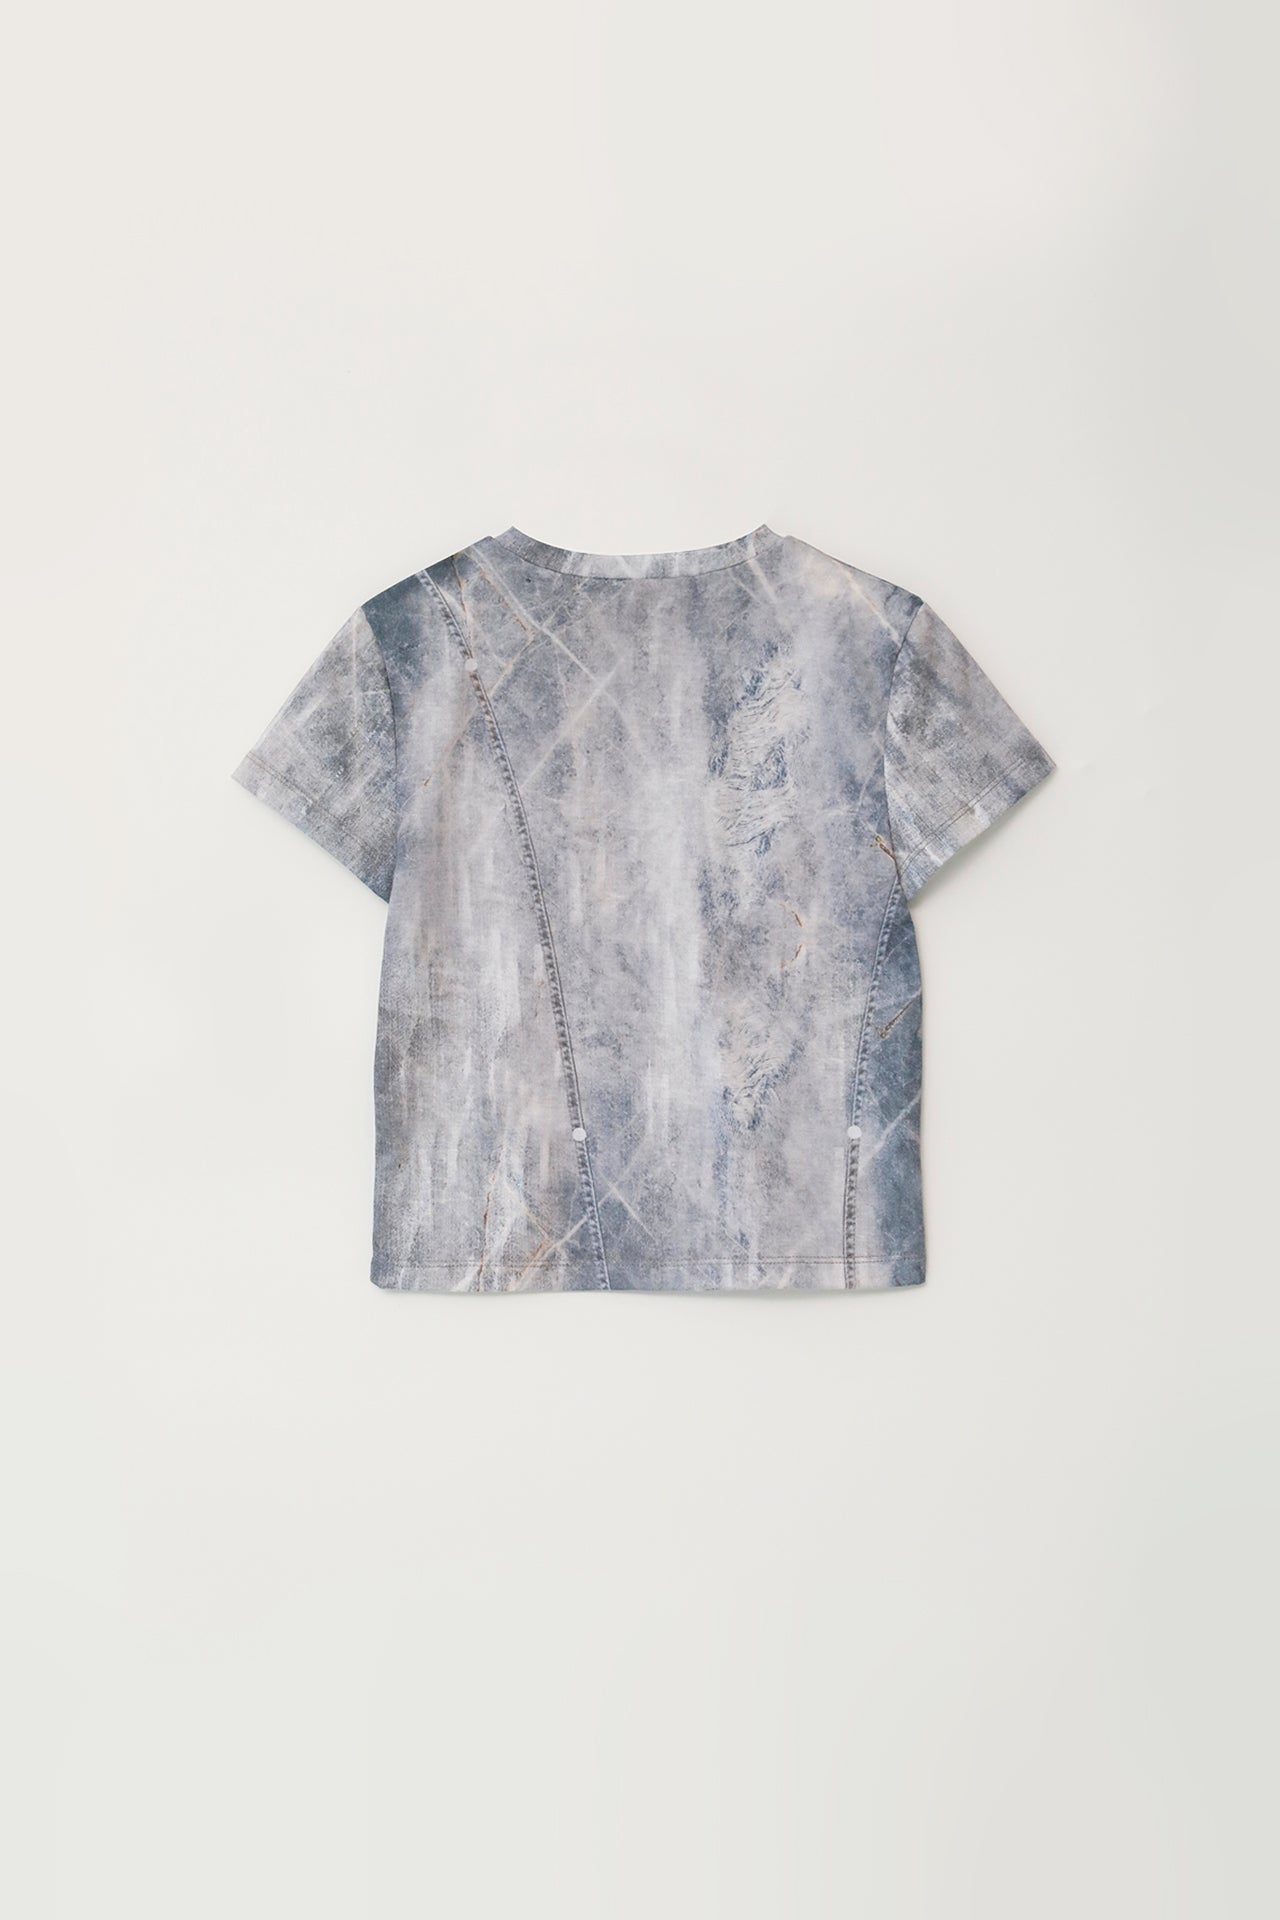 Yuse Denim Full Print Short Sleeve Round T-Shirt [Light Blue]